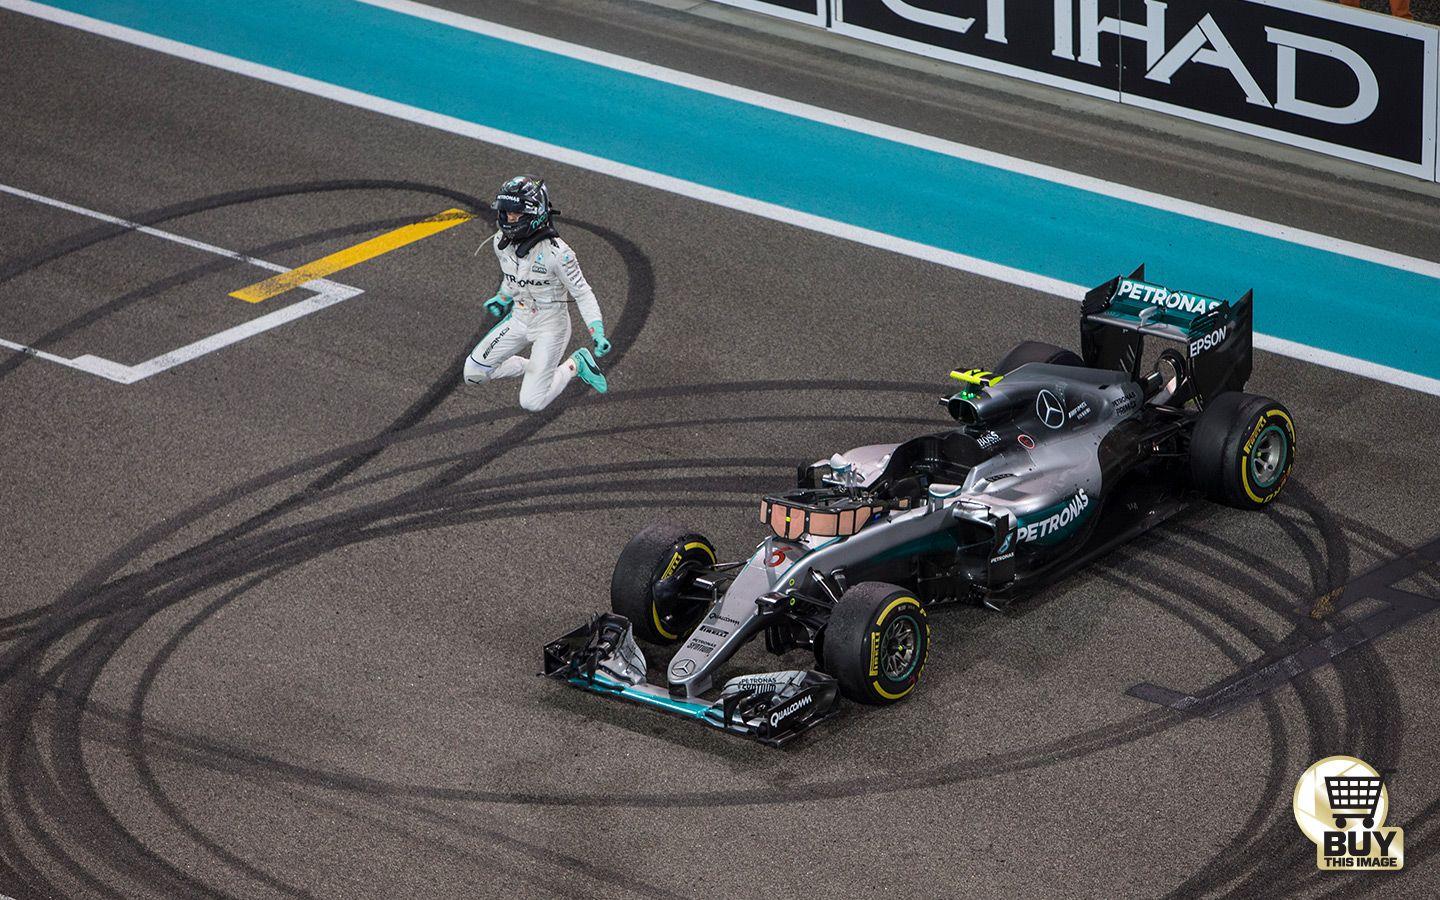 Abu Dhabi GP 2016: Nico Rosberg is 2016 world champion!